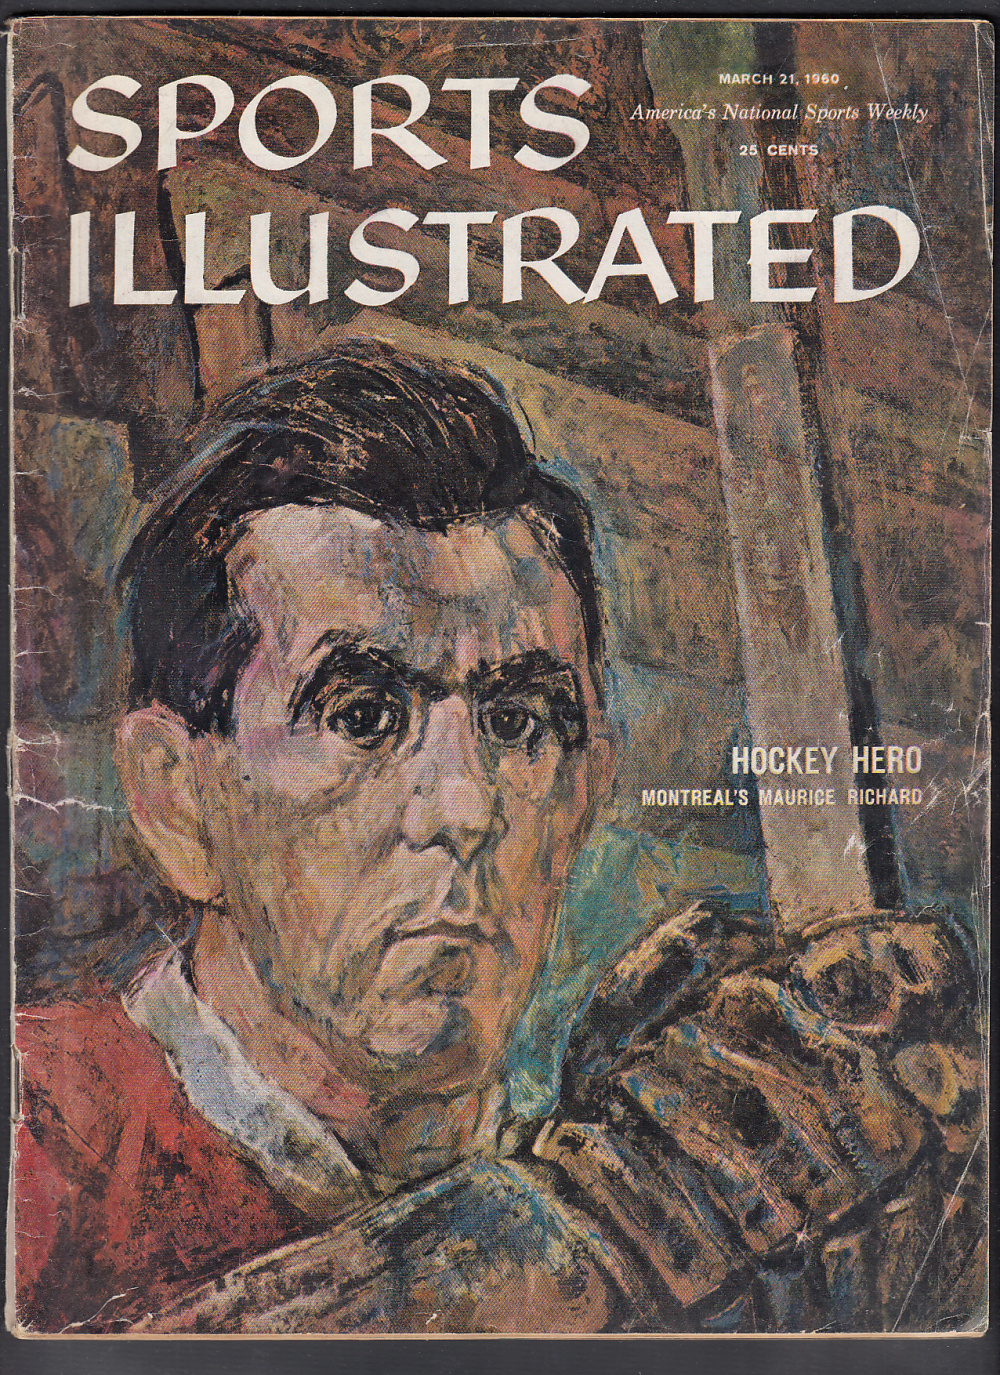 1960 SPORTS ILLUSTRATED MAGAZINE M. RICHARD ON COVER photo